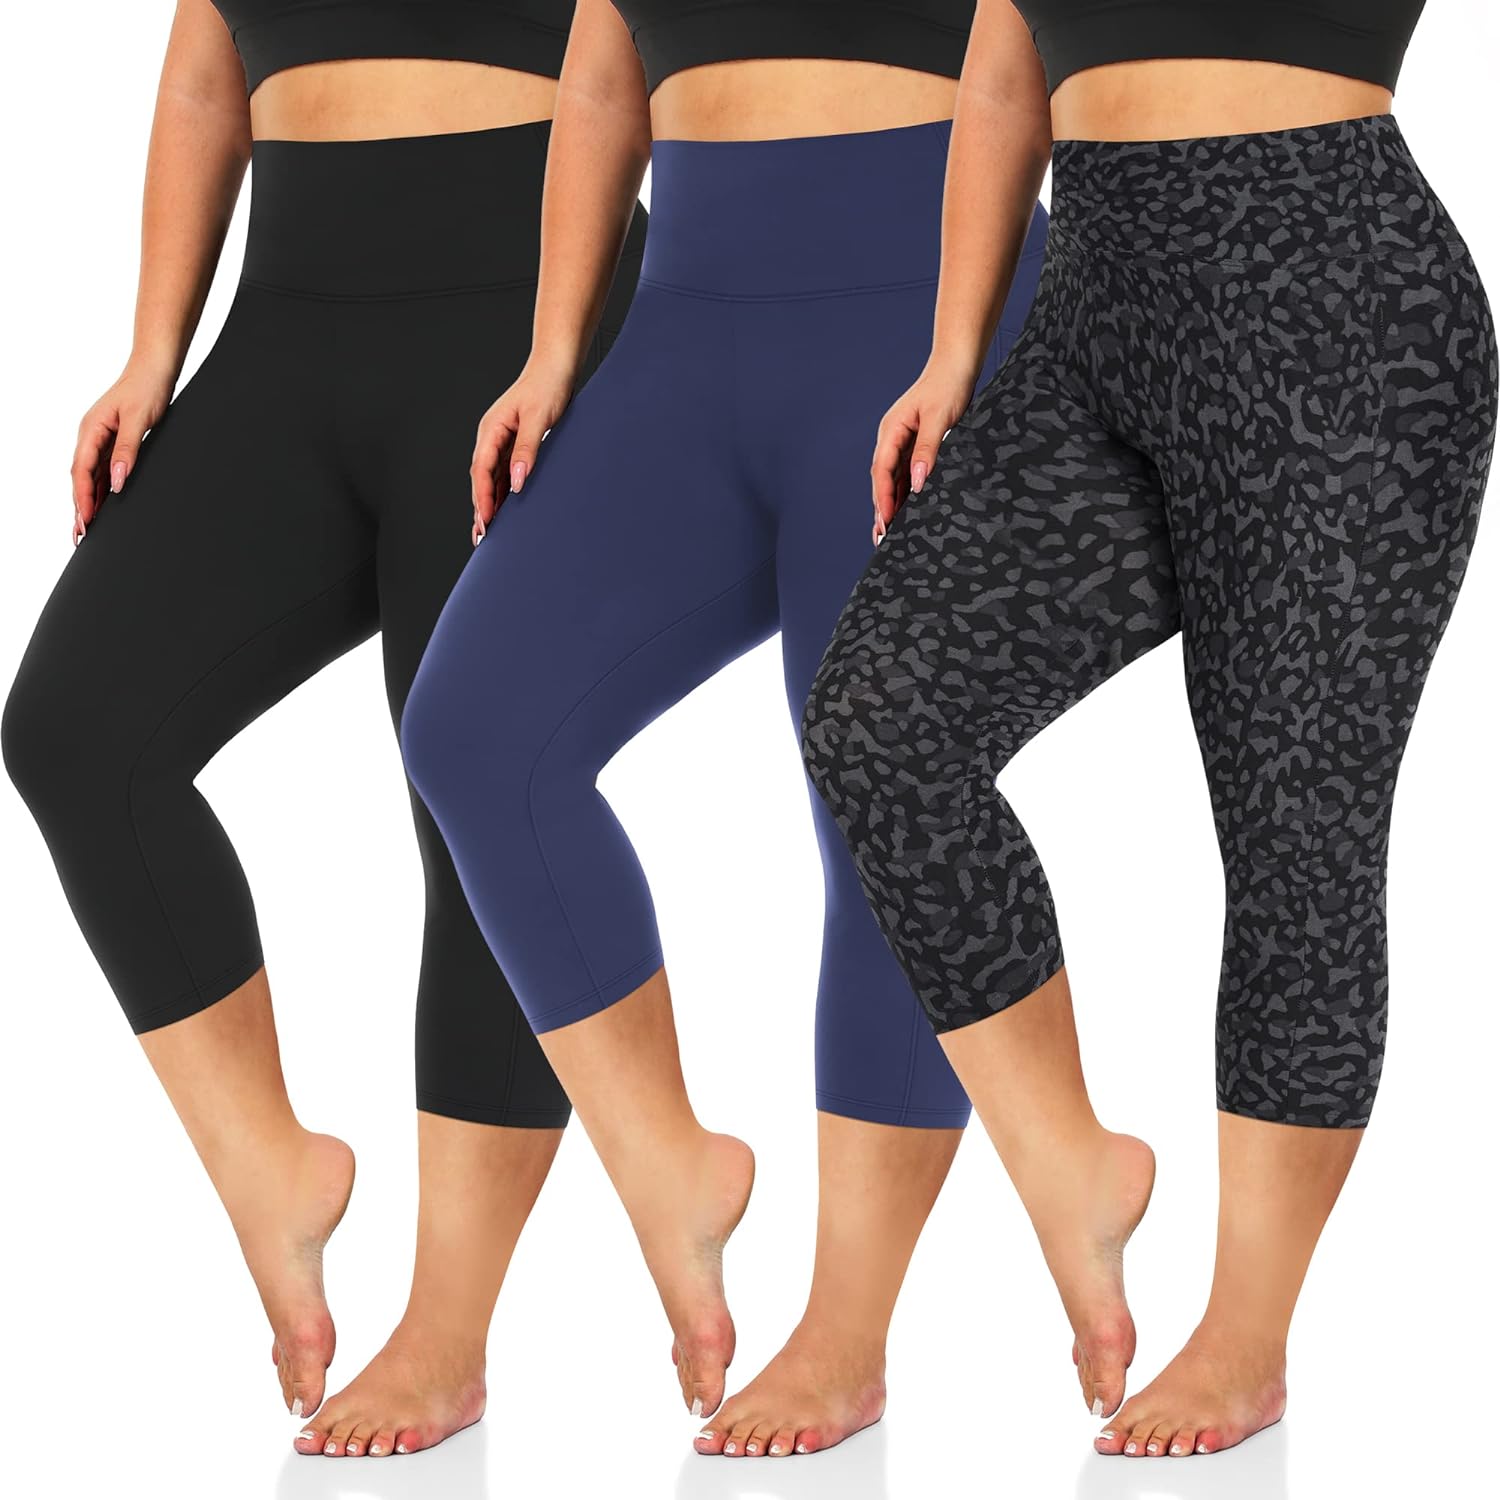 we fleece 3 Pack Plus Size Capri Leggings for Women -Stretchy X-Large-4X Tummy Control High Waist Spandex Workout Yoga Pants